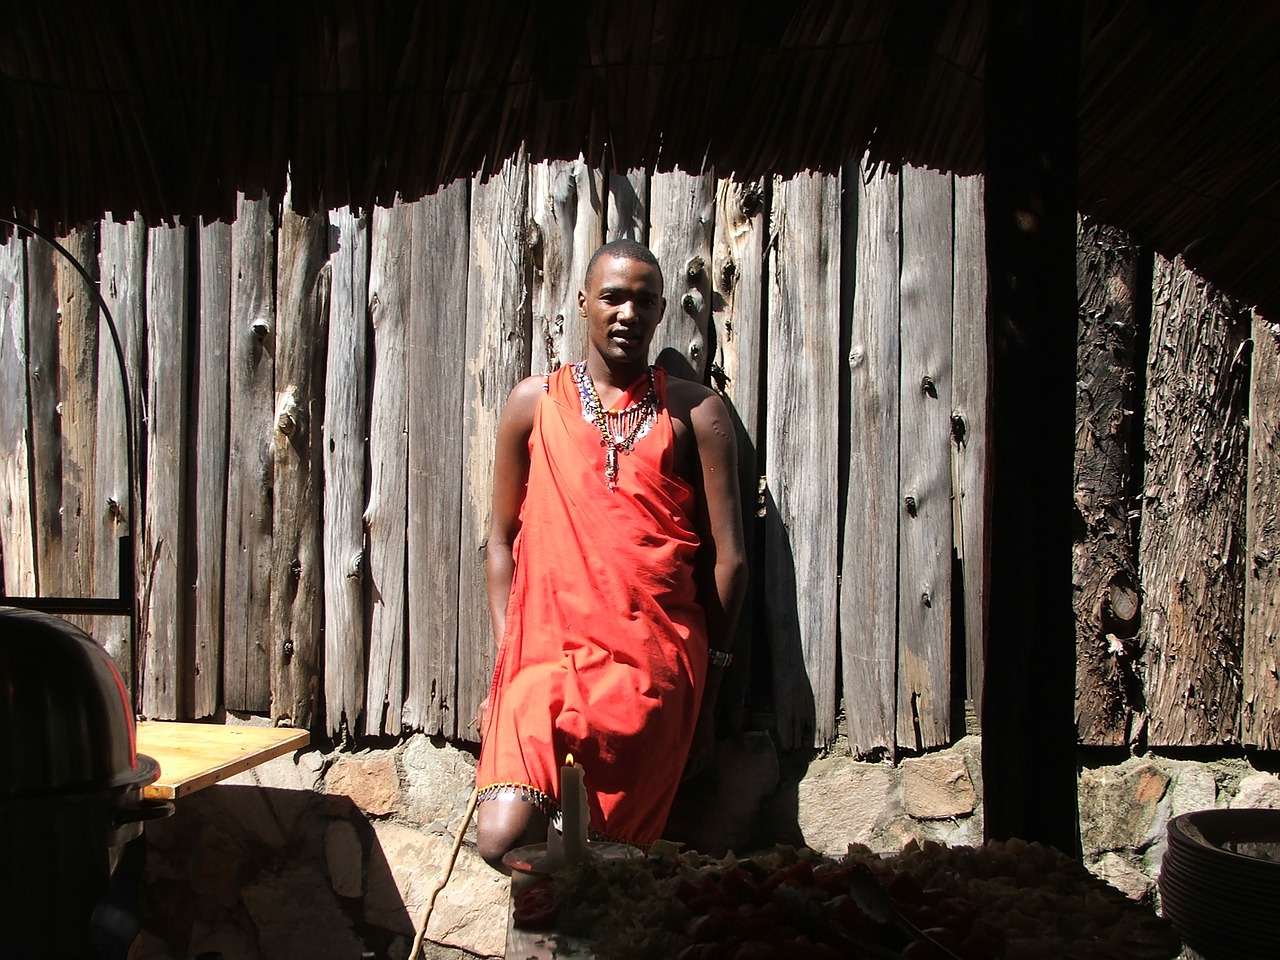 Masai, Karys, Afrika, Kenya, Kultūra, Gentis, Juoda, Etninis, Tradicinis, Tradicija